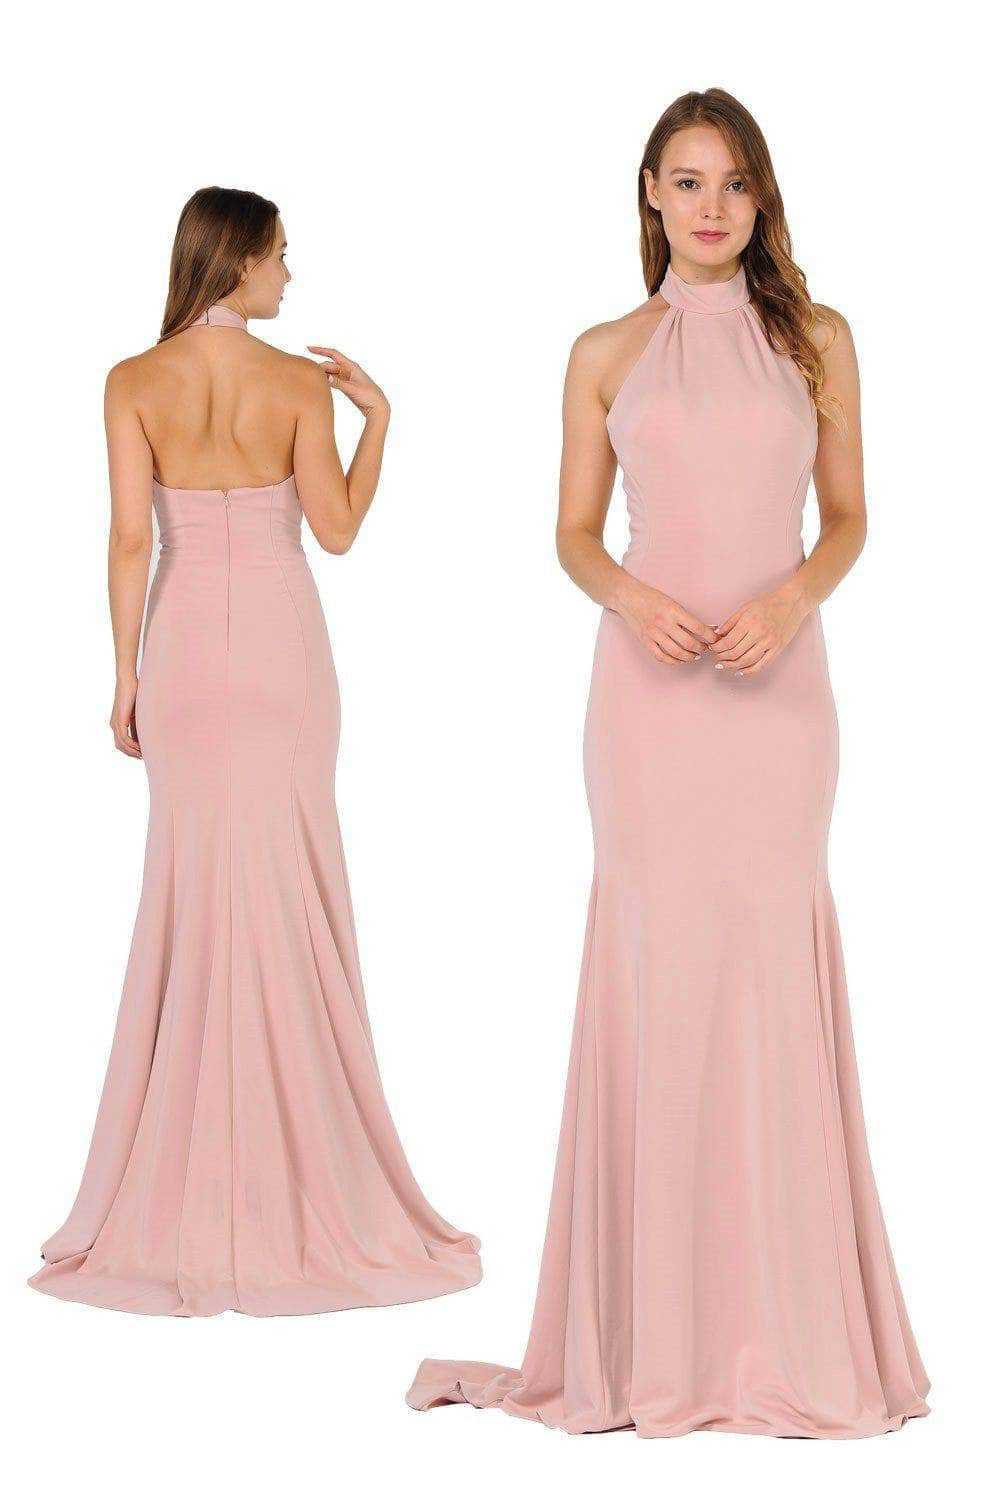 Poly USA, Poly USA 8252 - High Neck Sleeveless Prom Dress